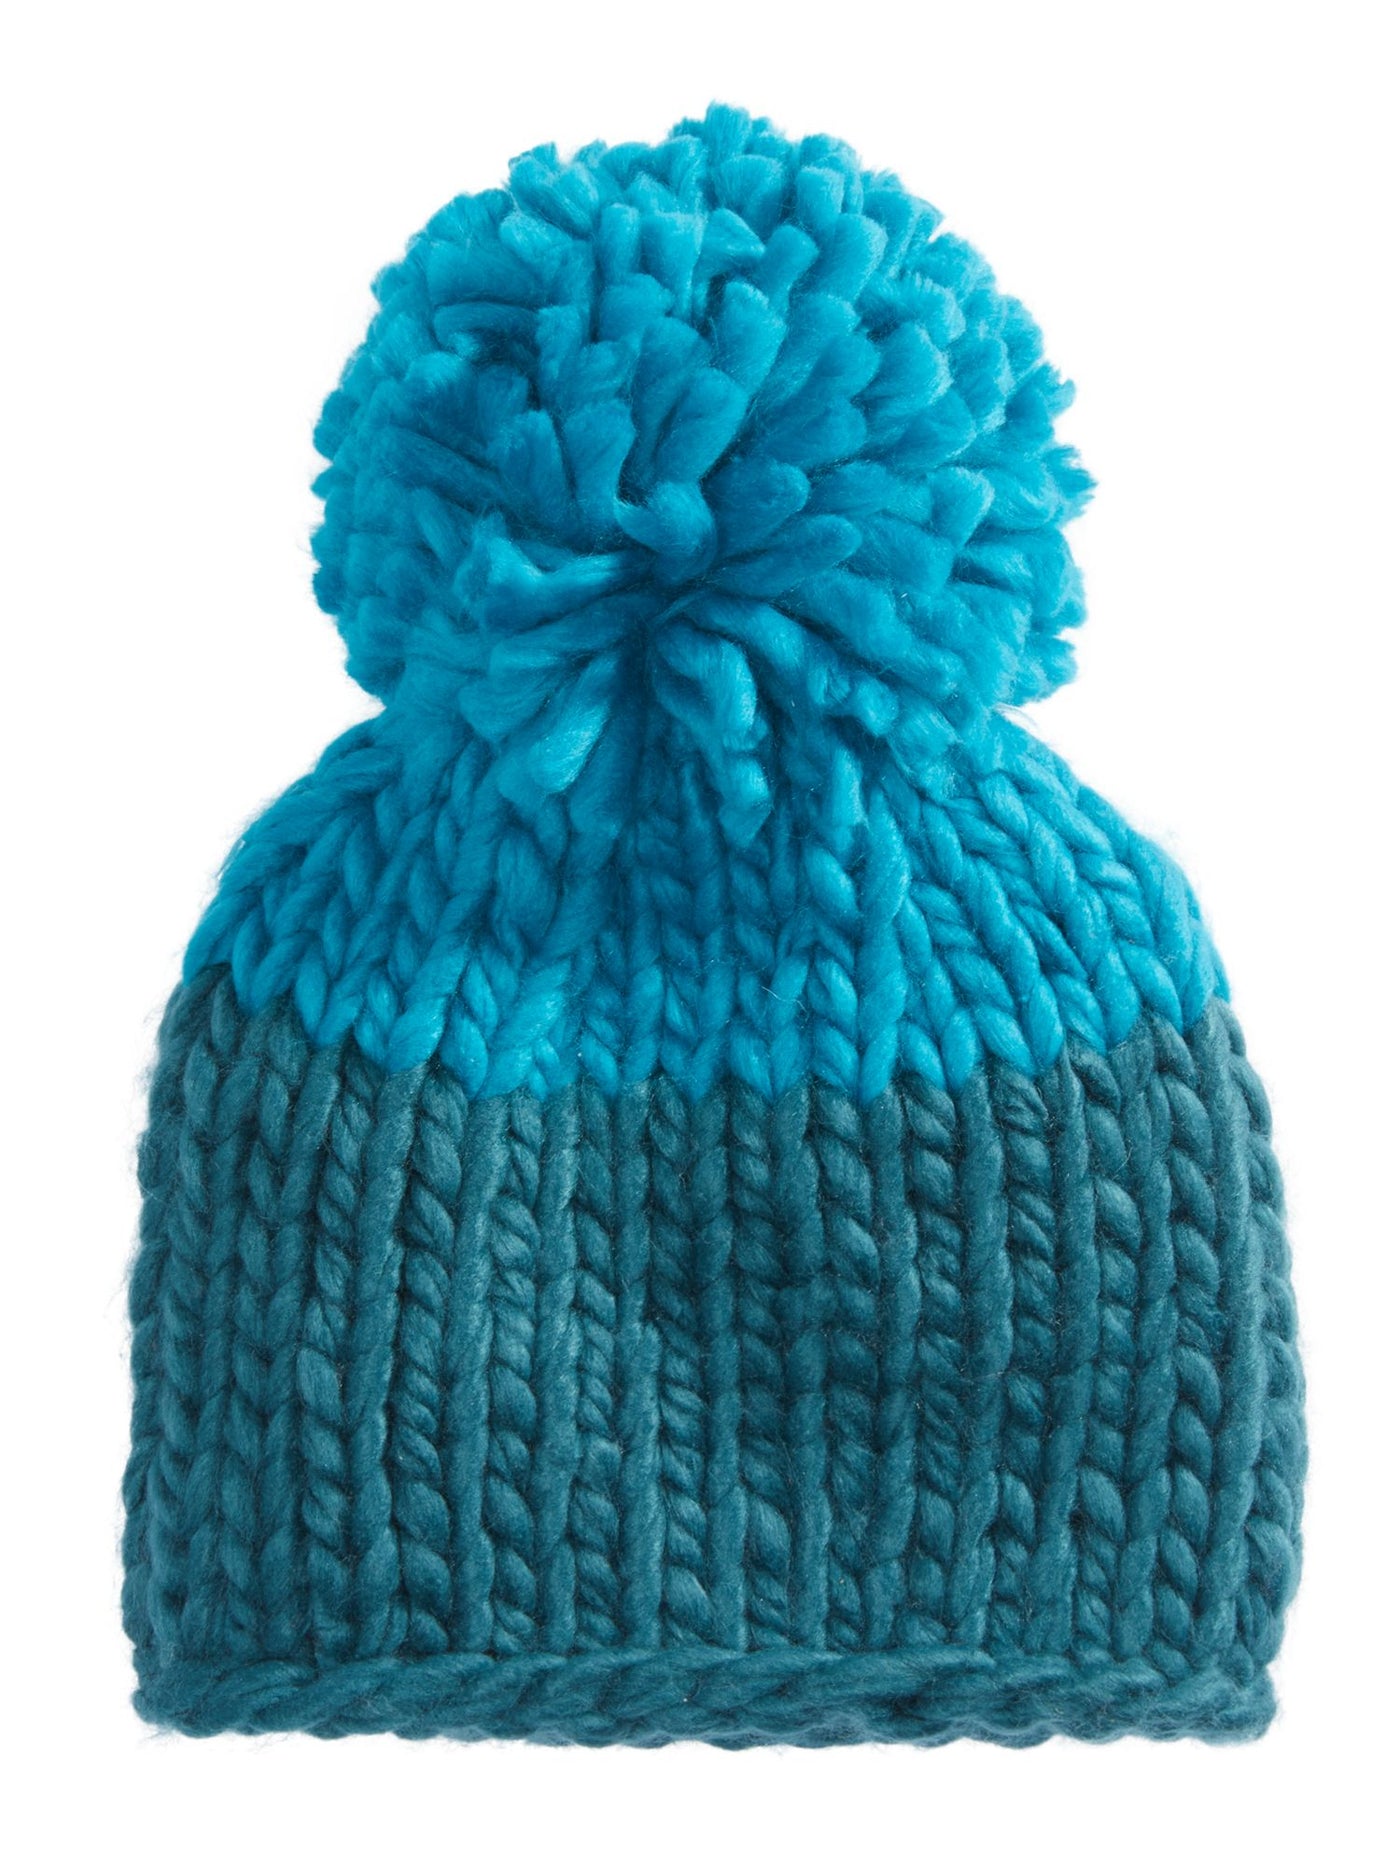 FREE PEOPLE Womens Aqua Colorblock Crochet Cozy Up Winter Beanie Hat Cap